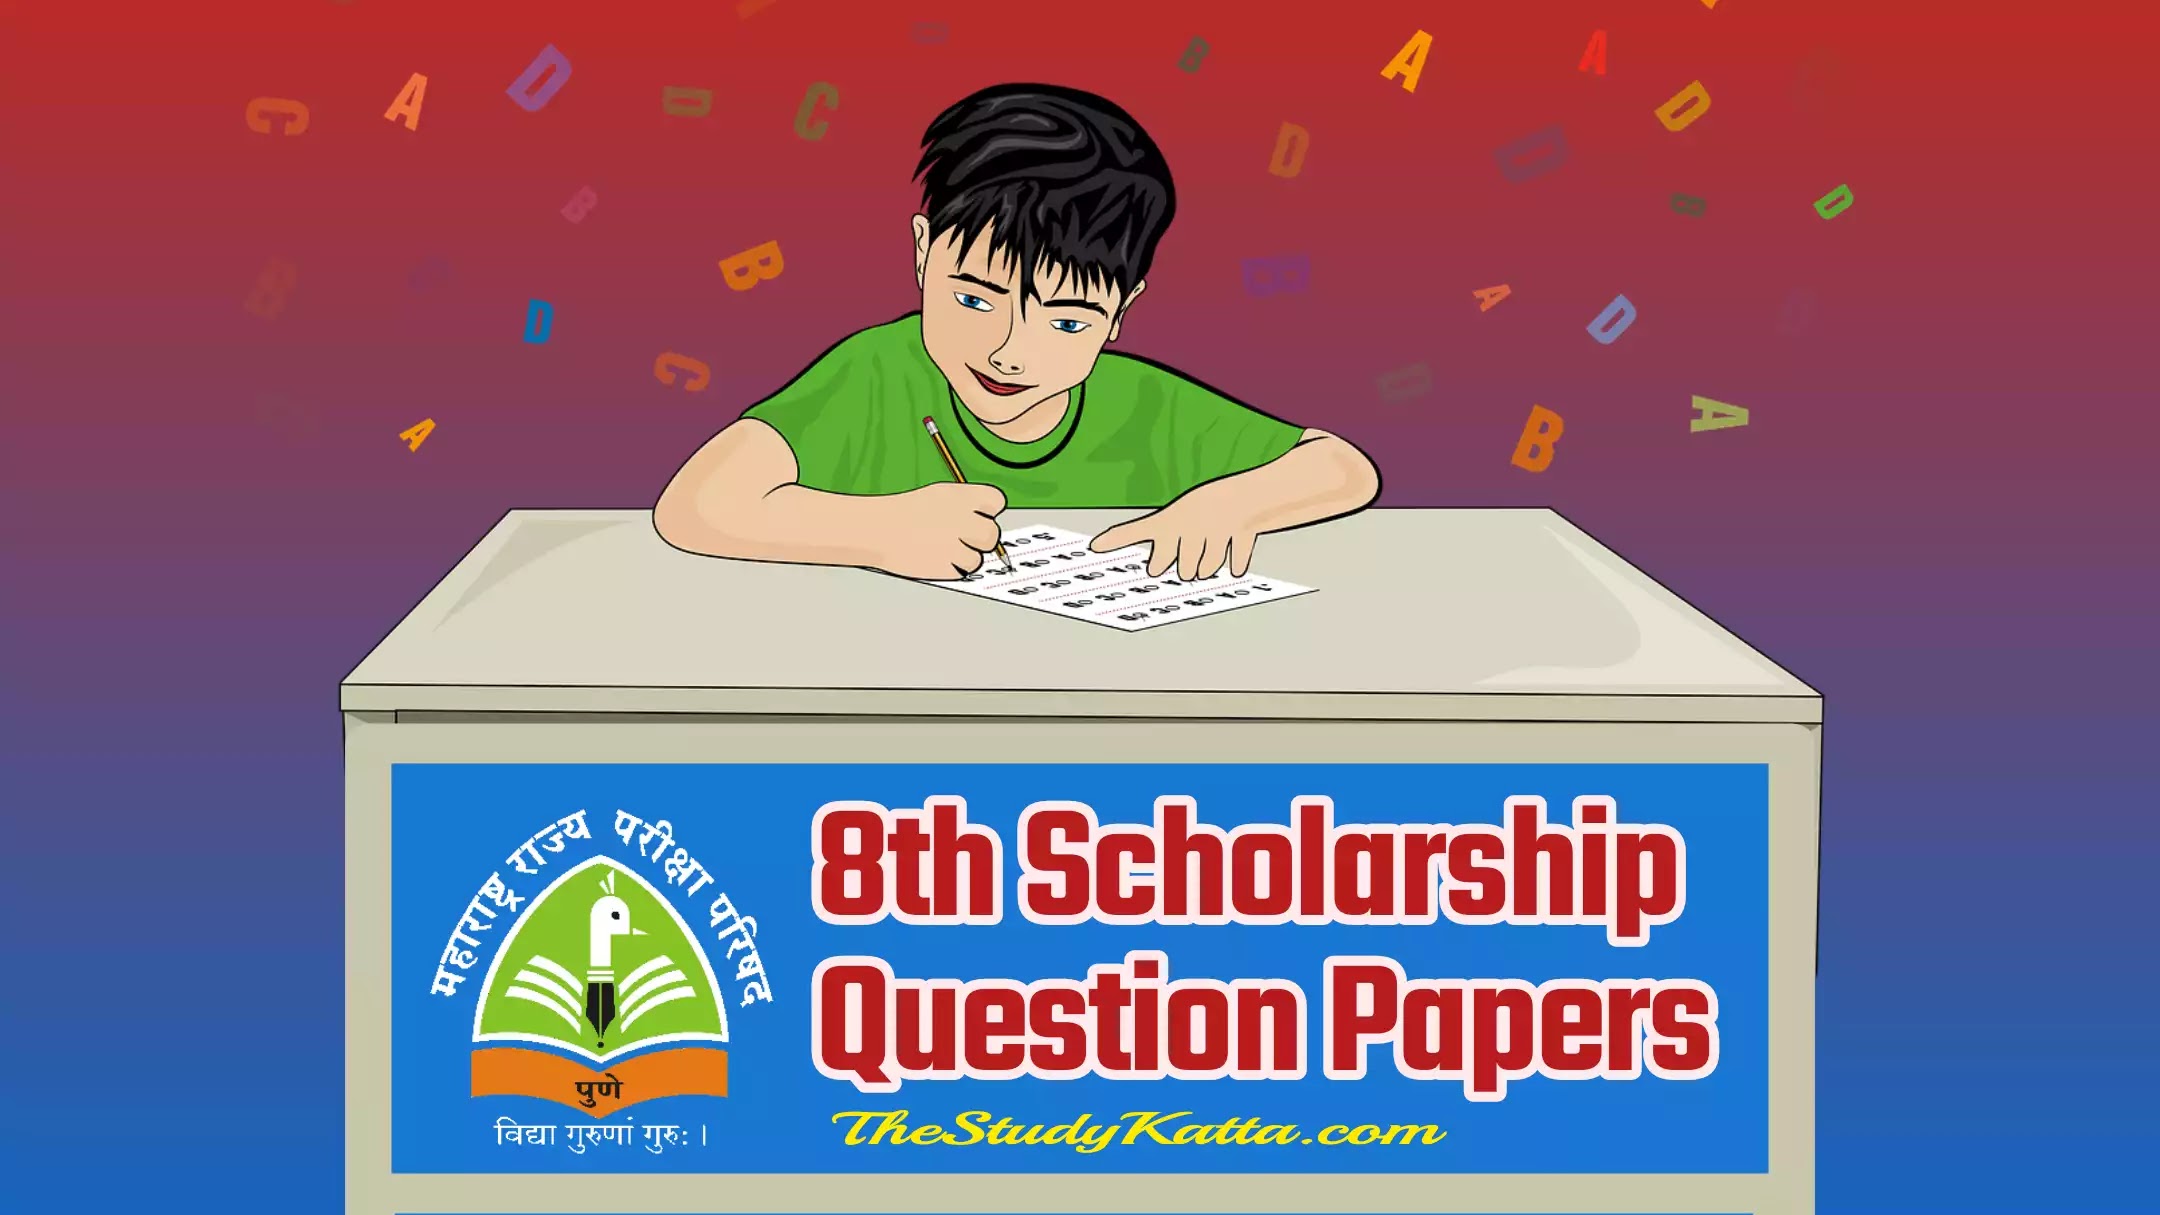 8th scholarship question paper pdf download | ८ वी शिष्यवृत्ती परीक्षा प्रश्नपत्रिका PDF | ८ वी स्कॉलरशिप परीक्षा प्रश्नपत्रिका PDF